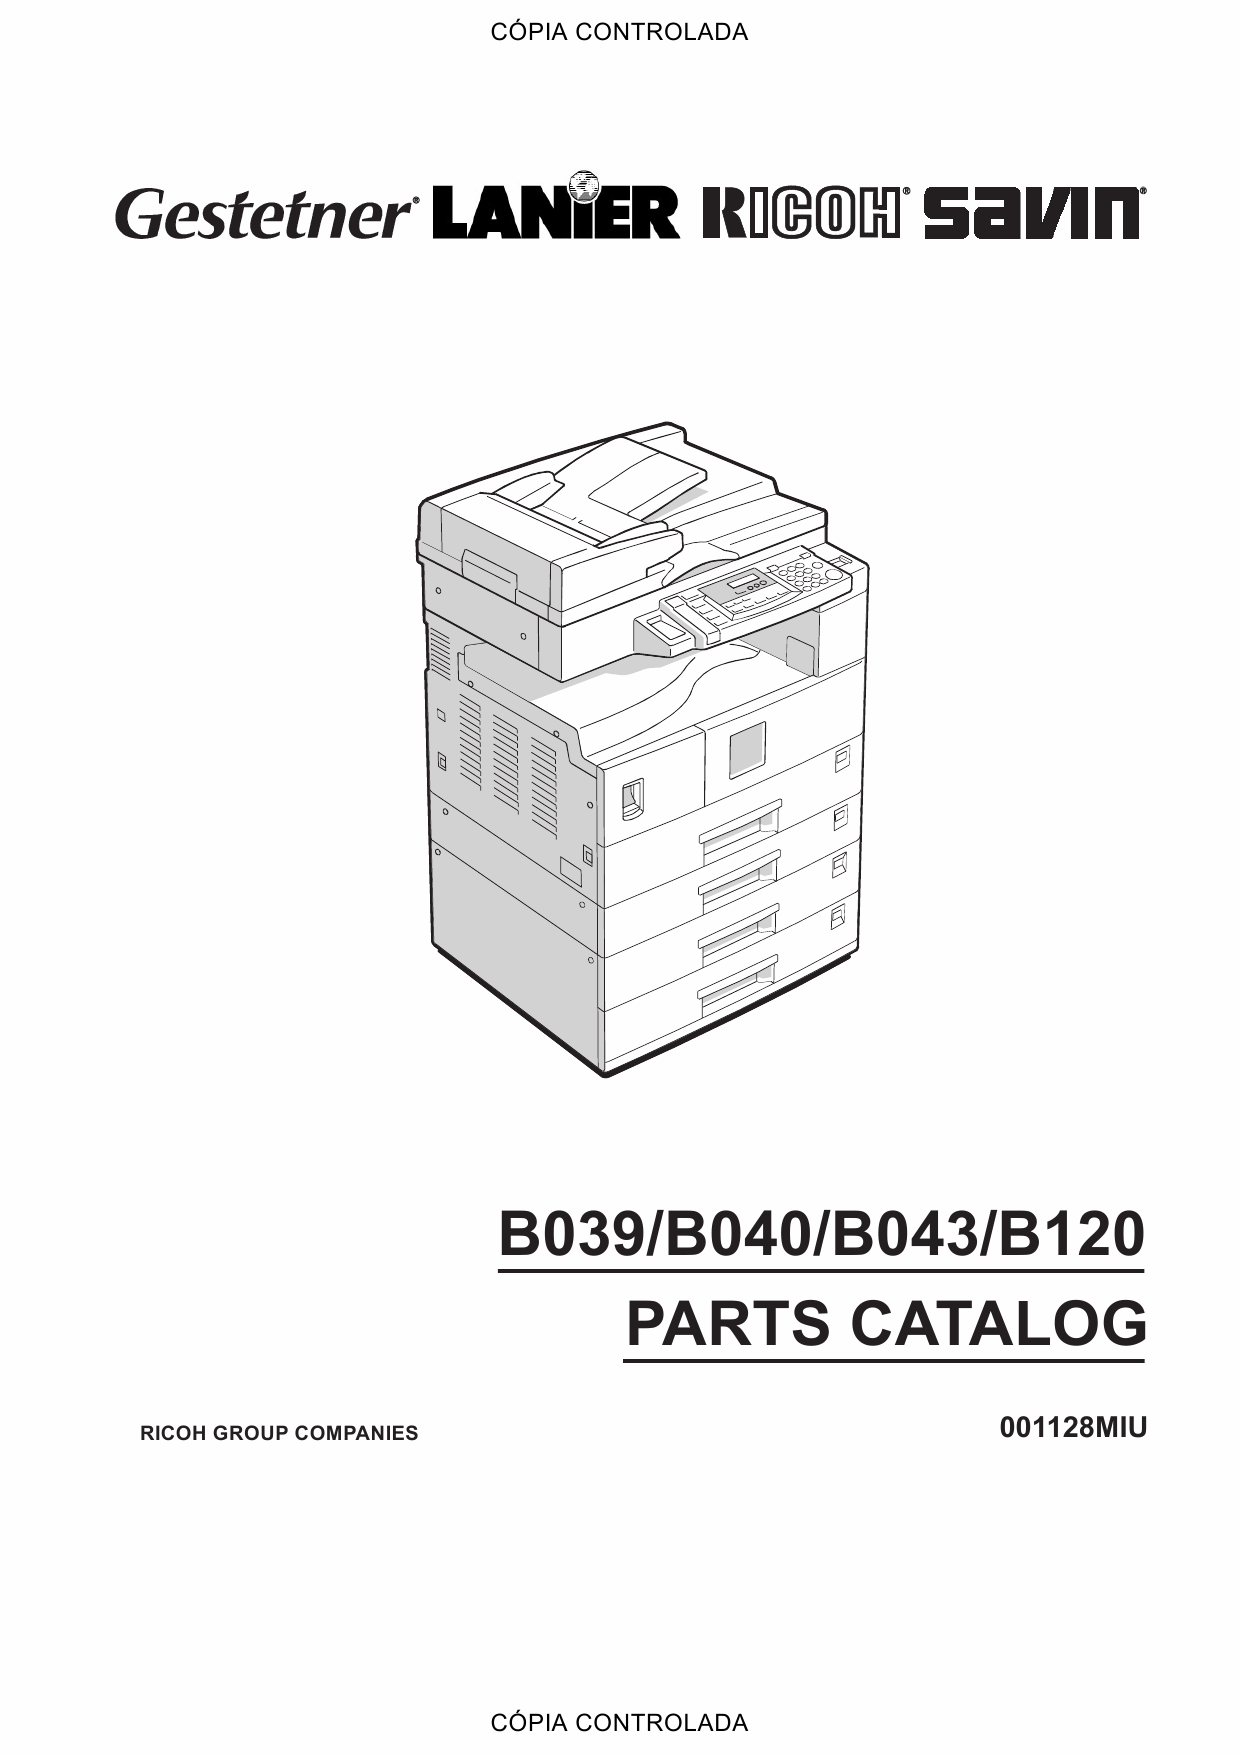 RICOH Aficio 1113 B120 Parts Catalog-1